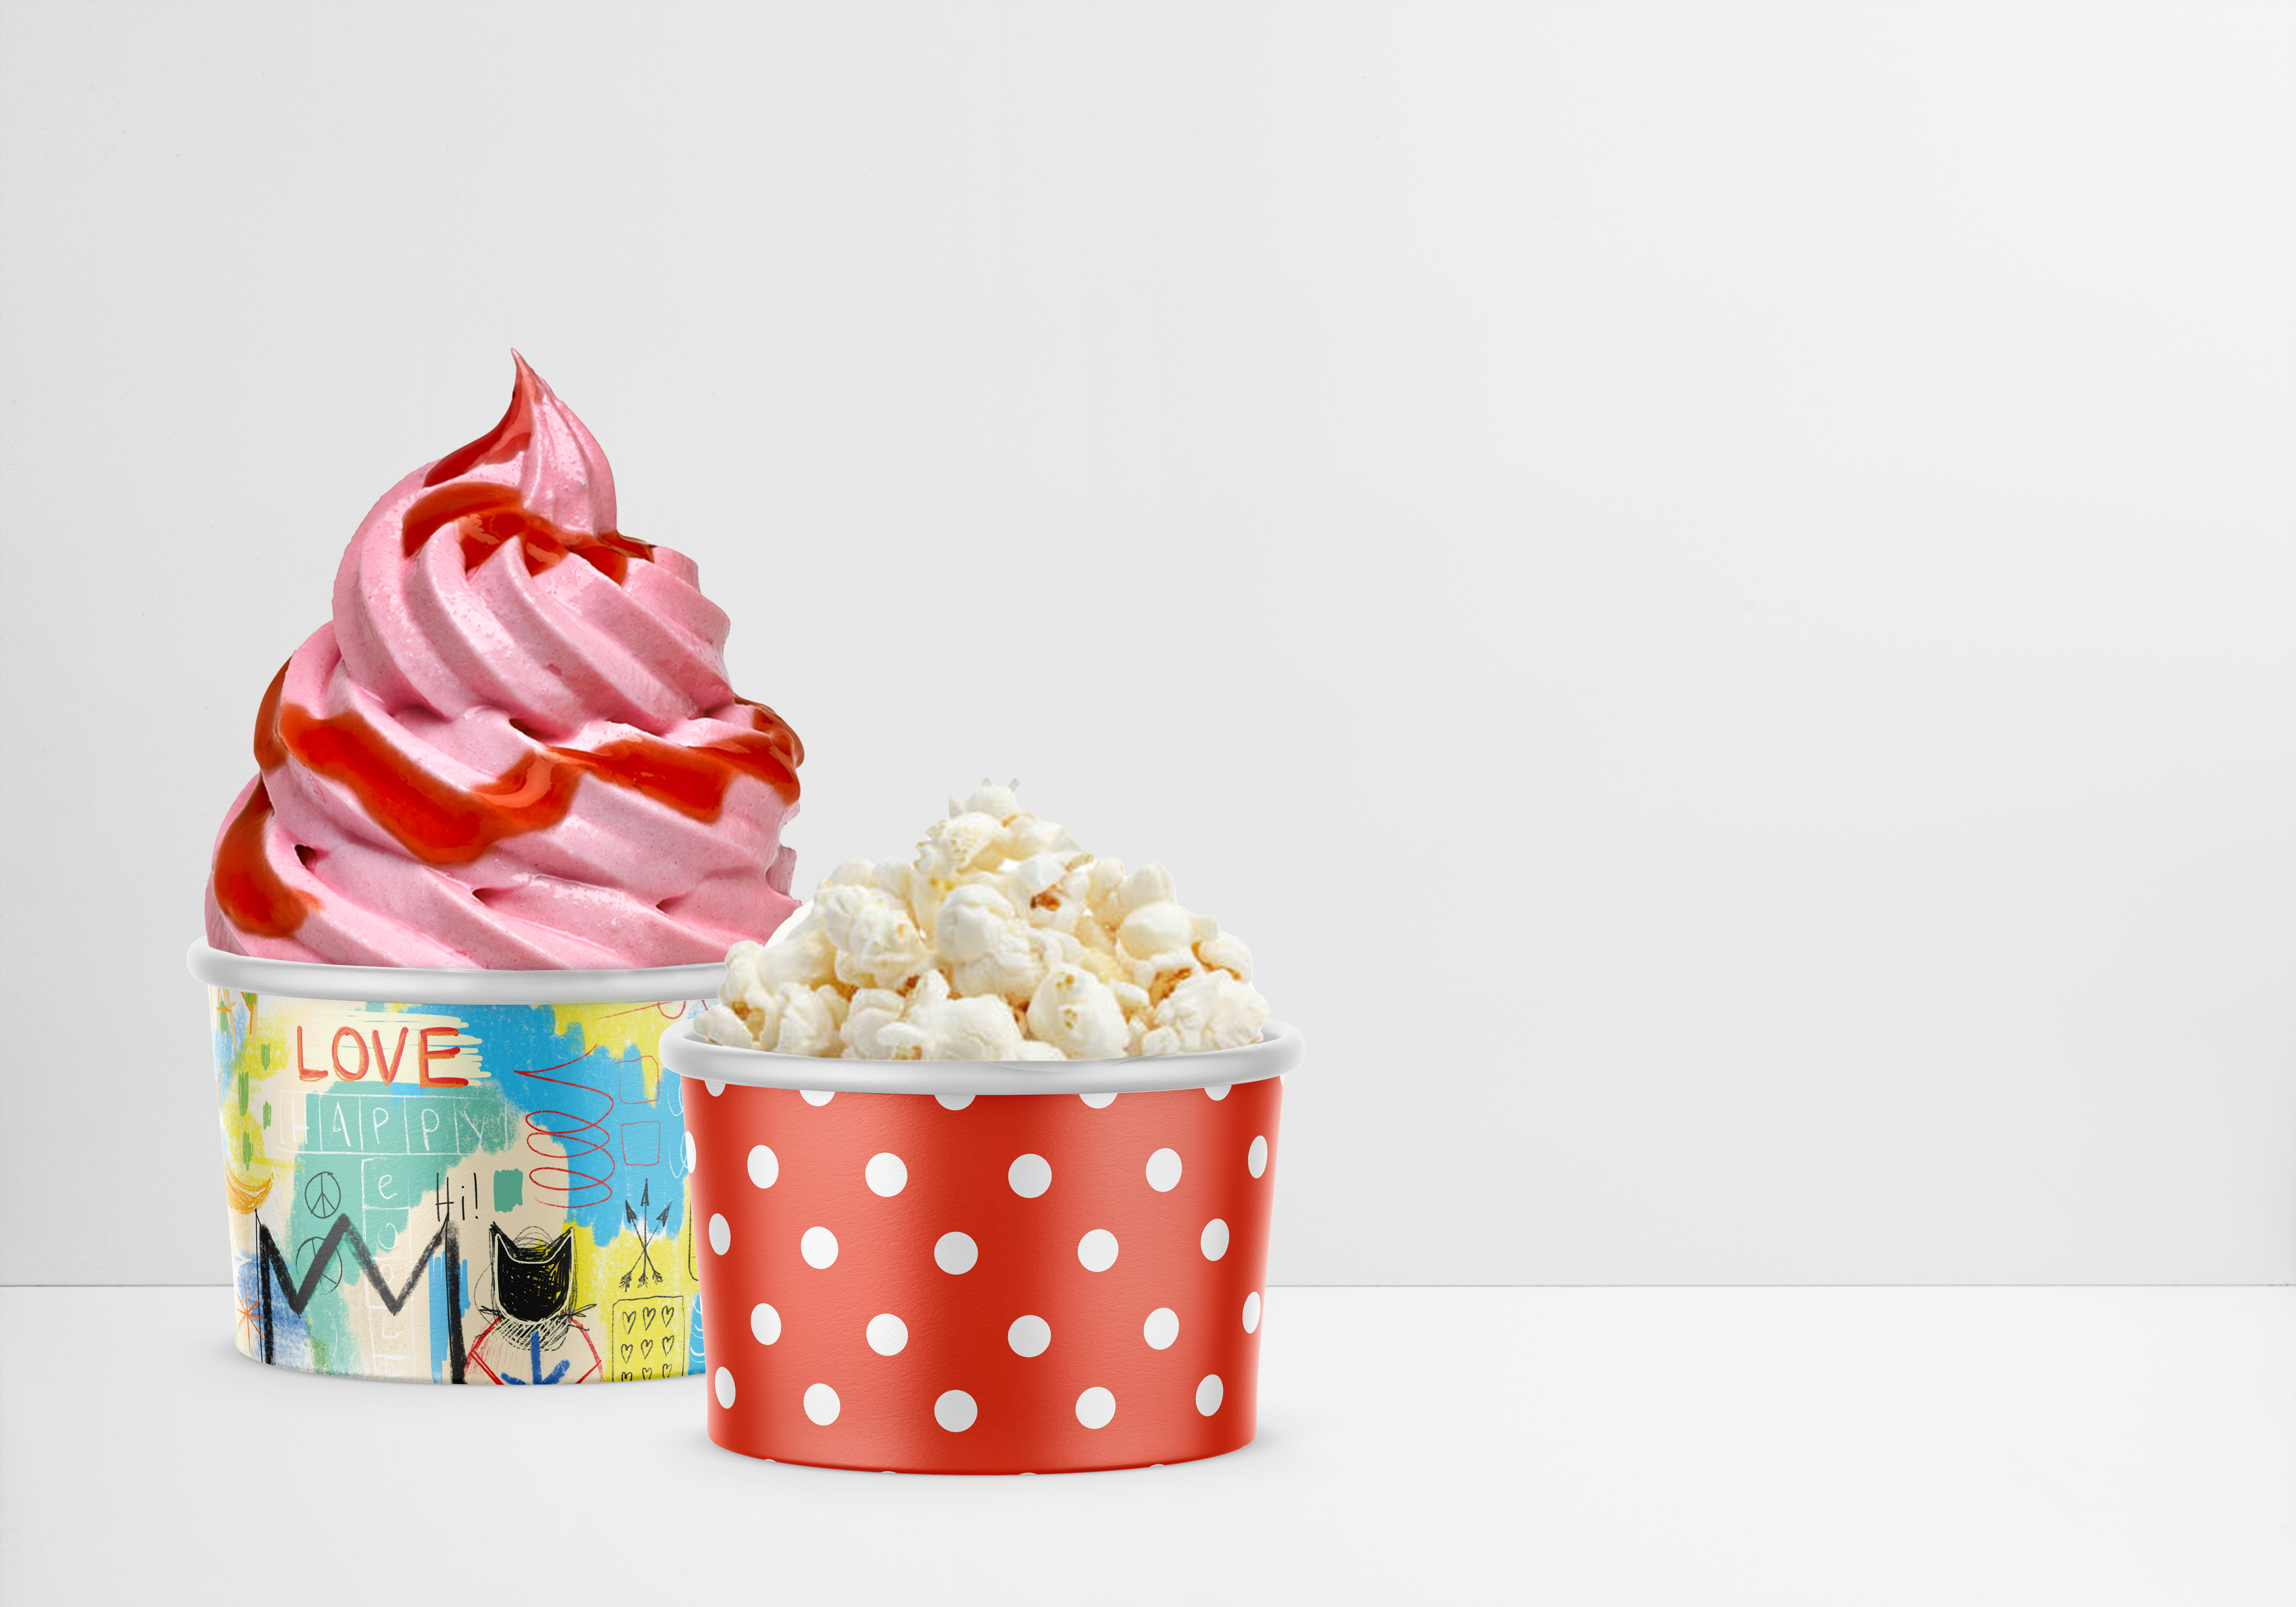 Meet the Summer with
custom design Ice Cream Cups!